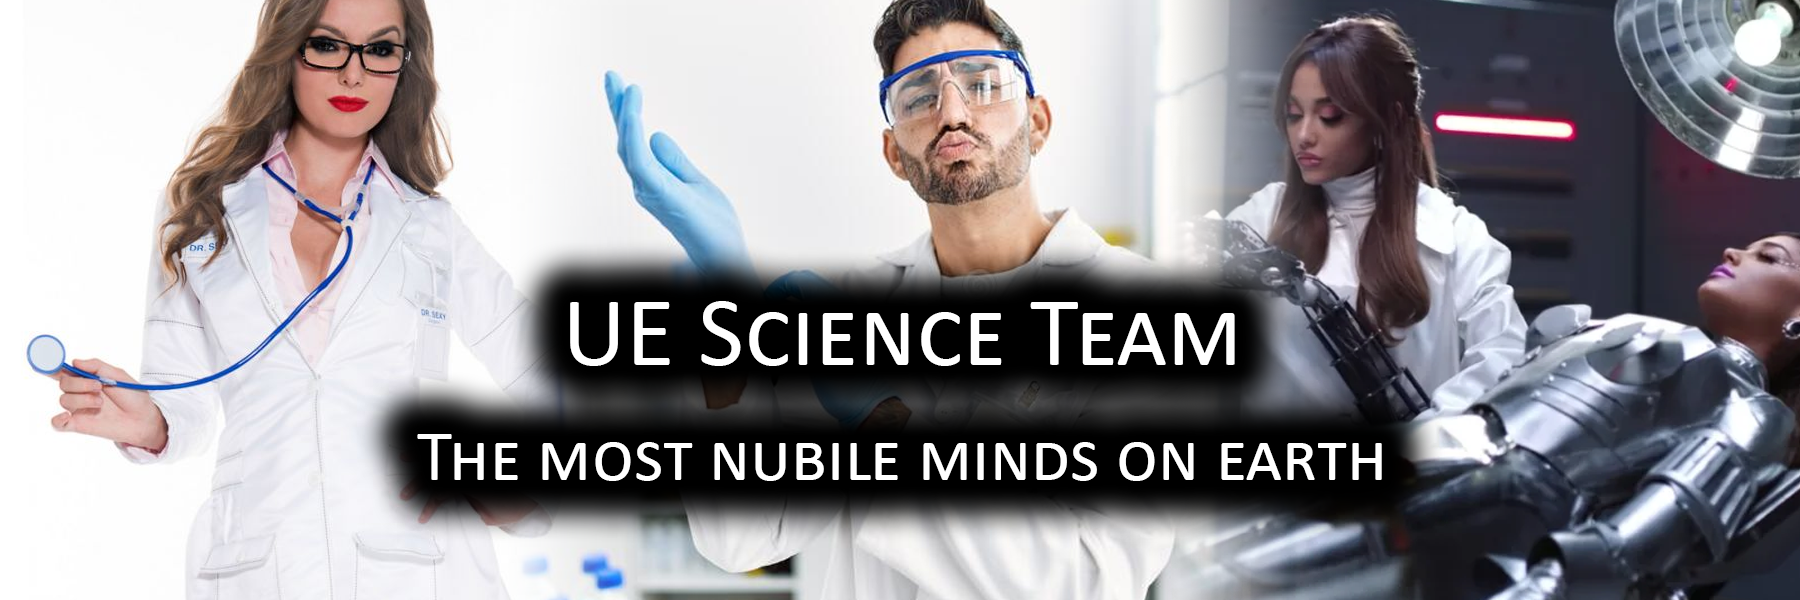 The UE Science Team